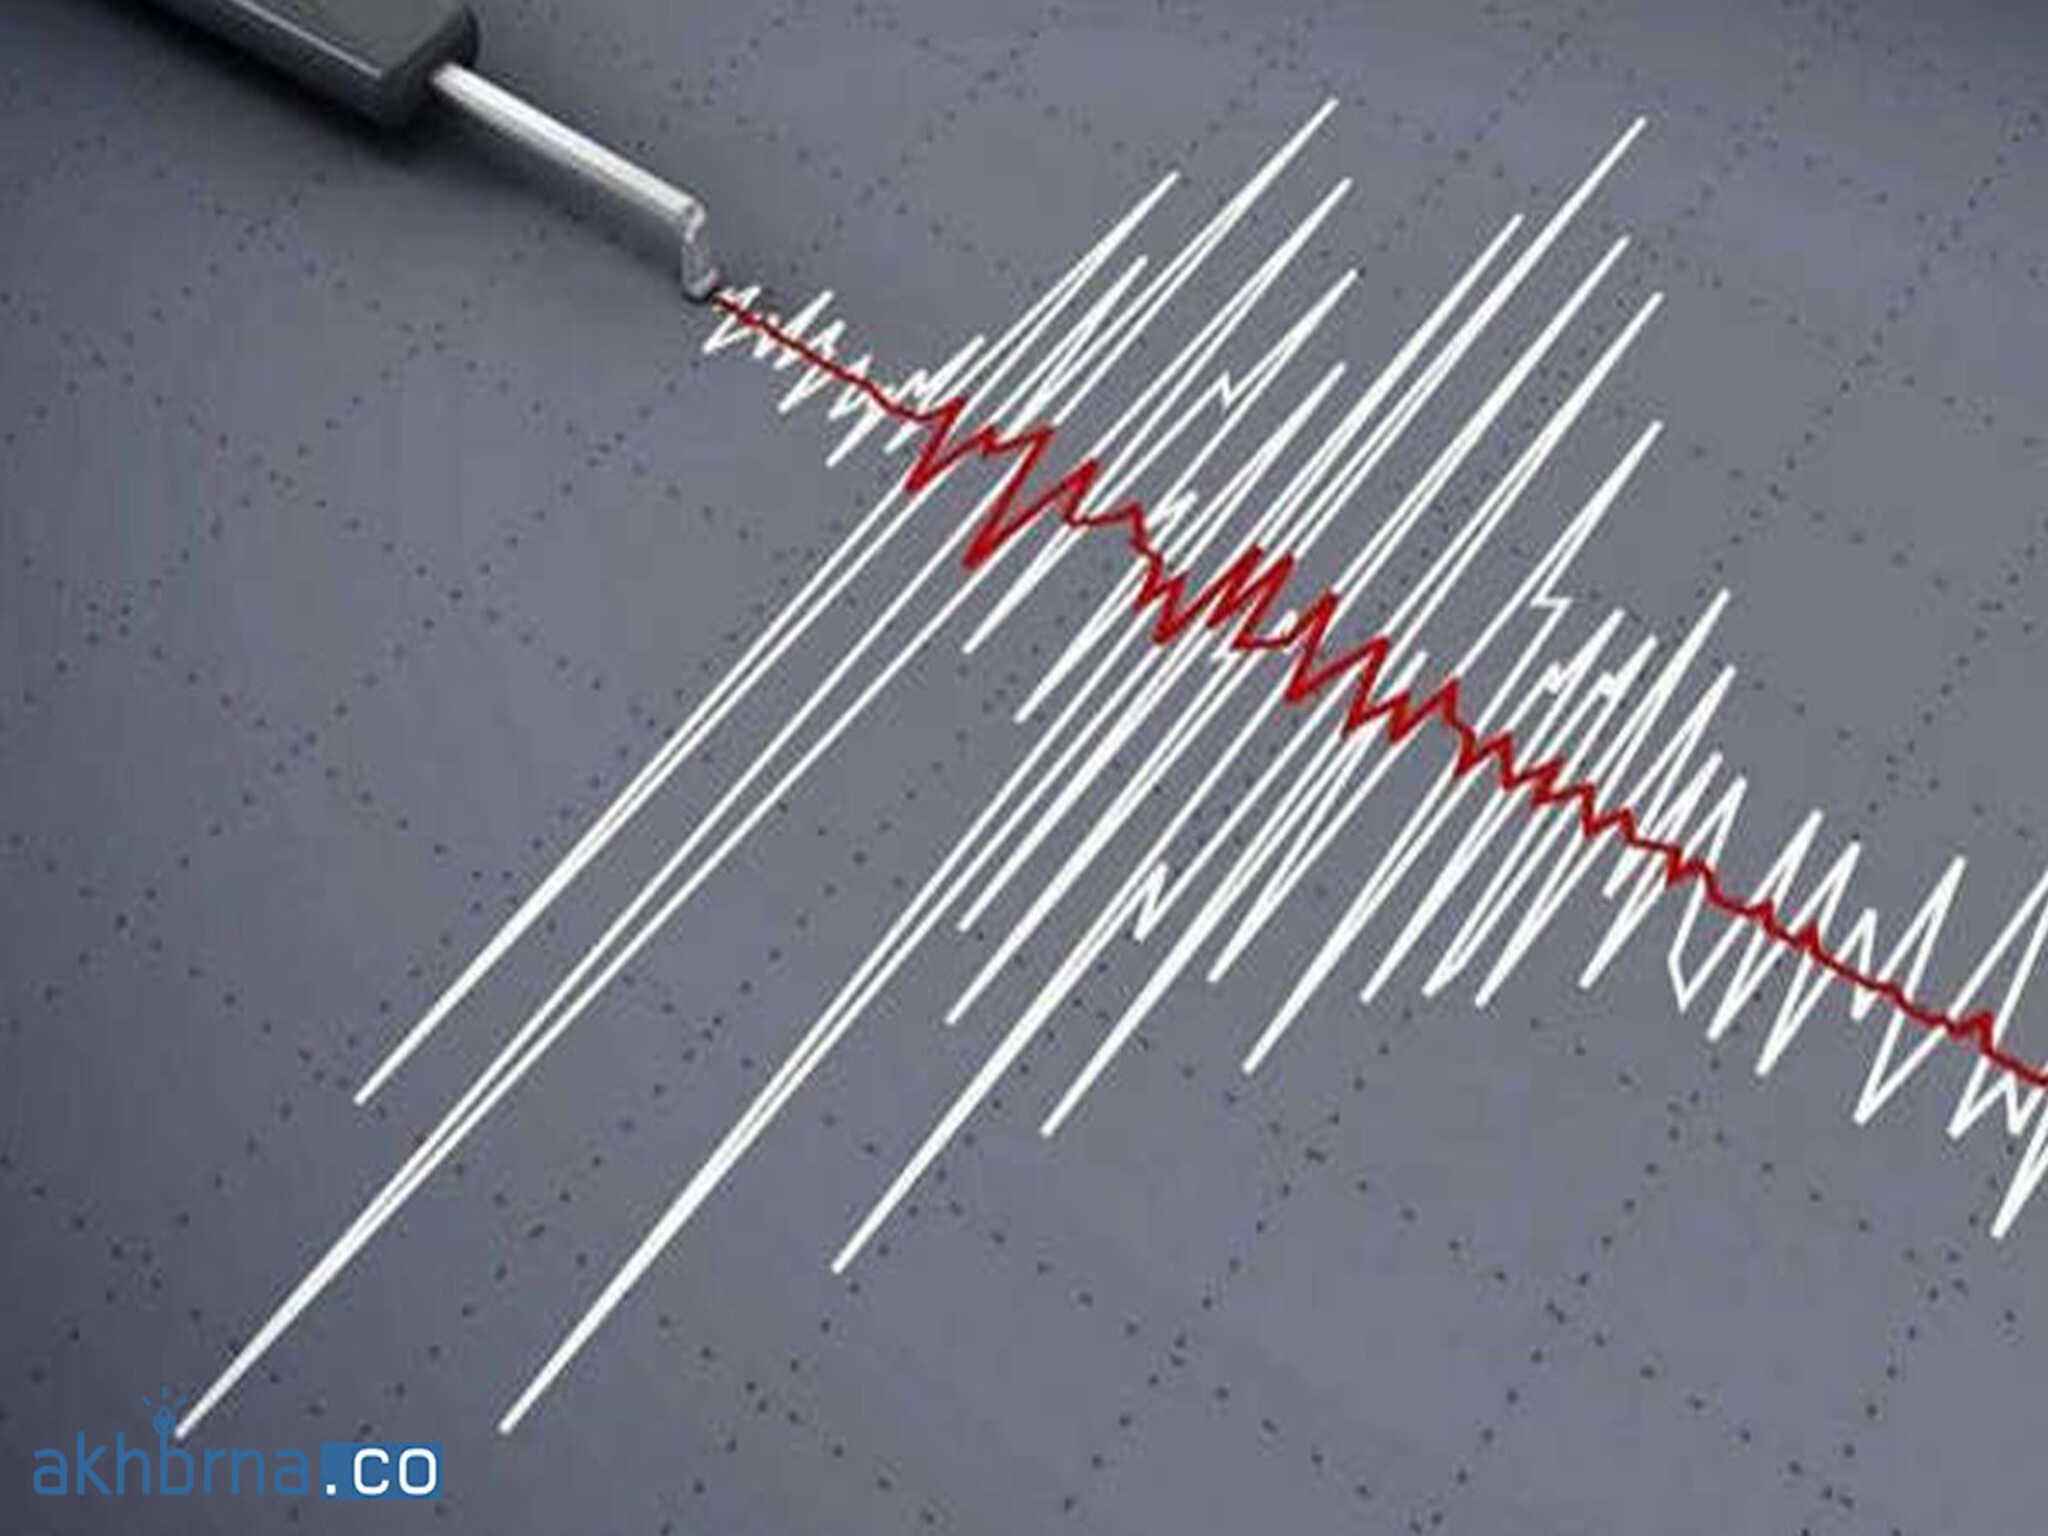 A 6.6-magnitude earthquake struck eastern Indonesia; no tsunami alert issued